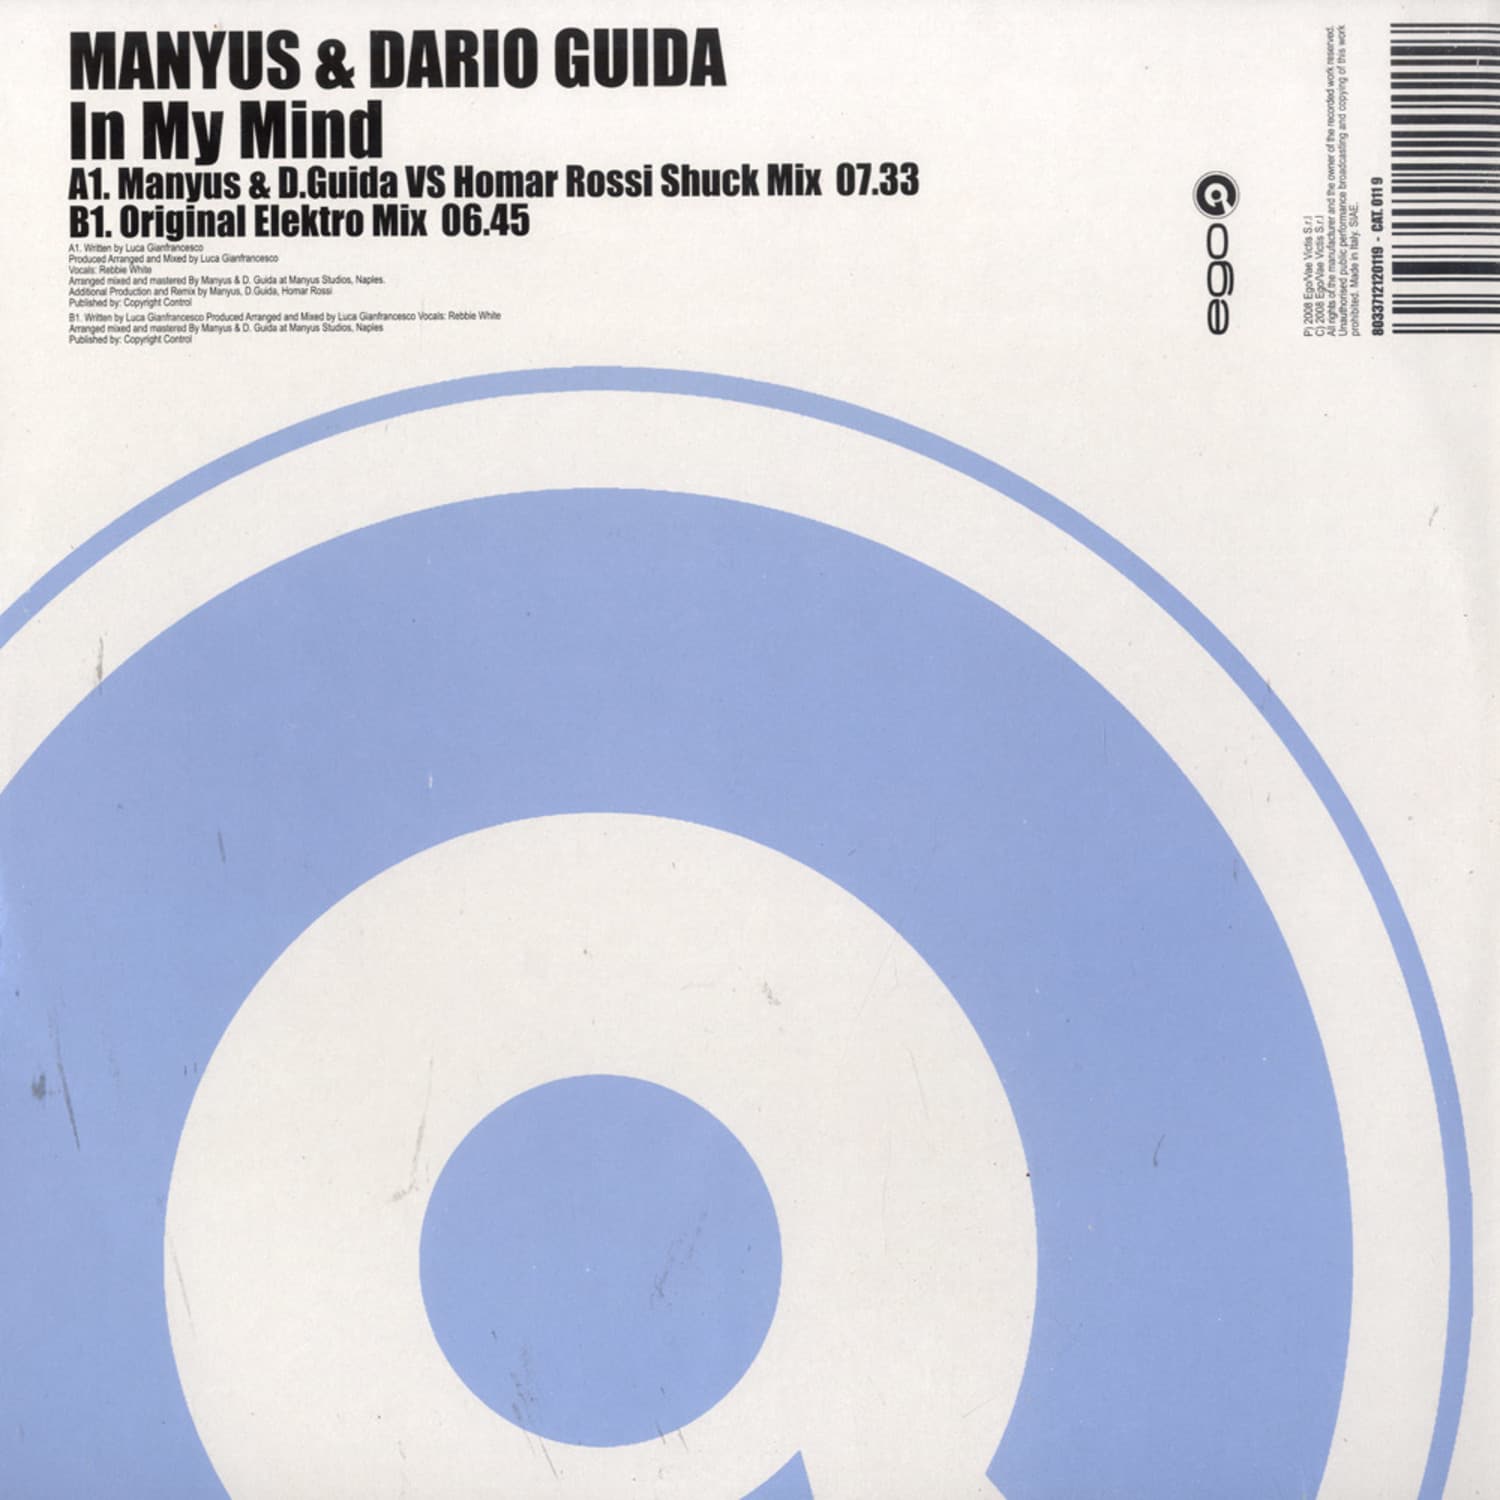 Manyus & Dario Guida - IN MY MIND